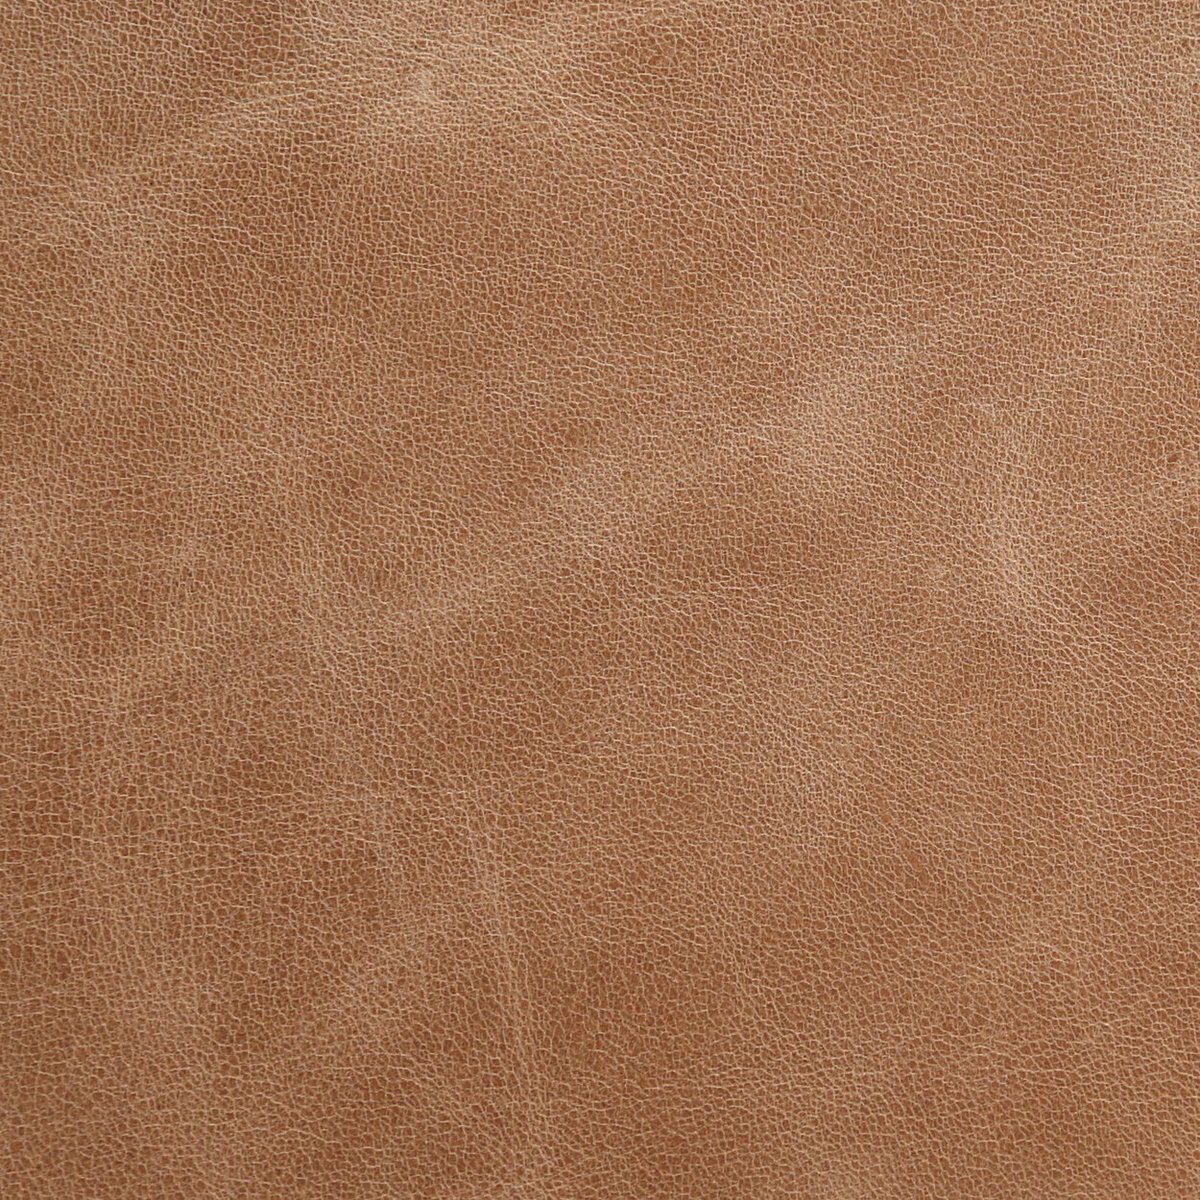 Leather-Distressed-Sahara